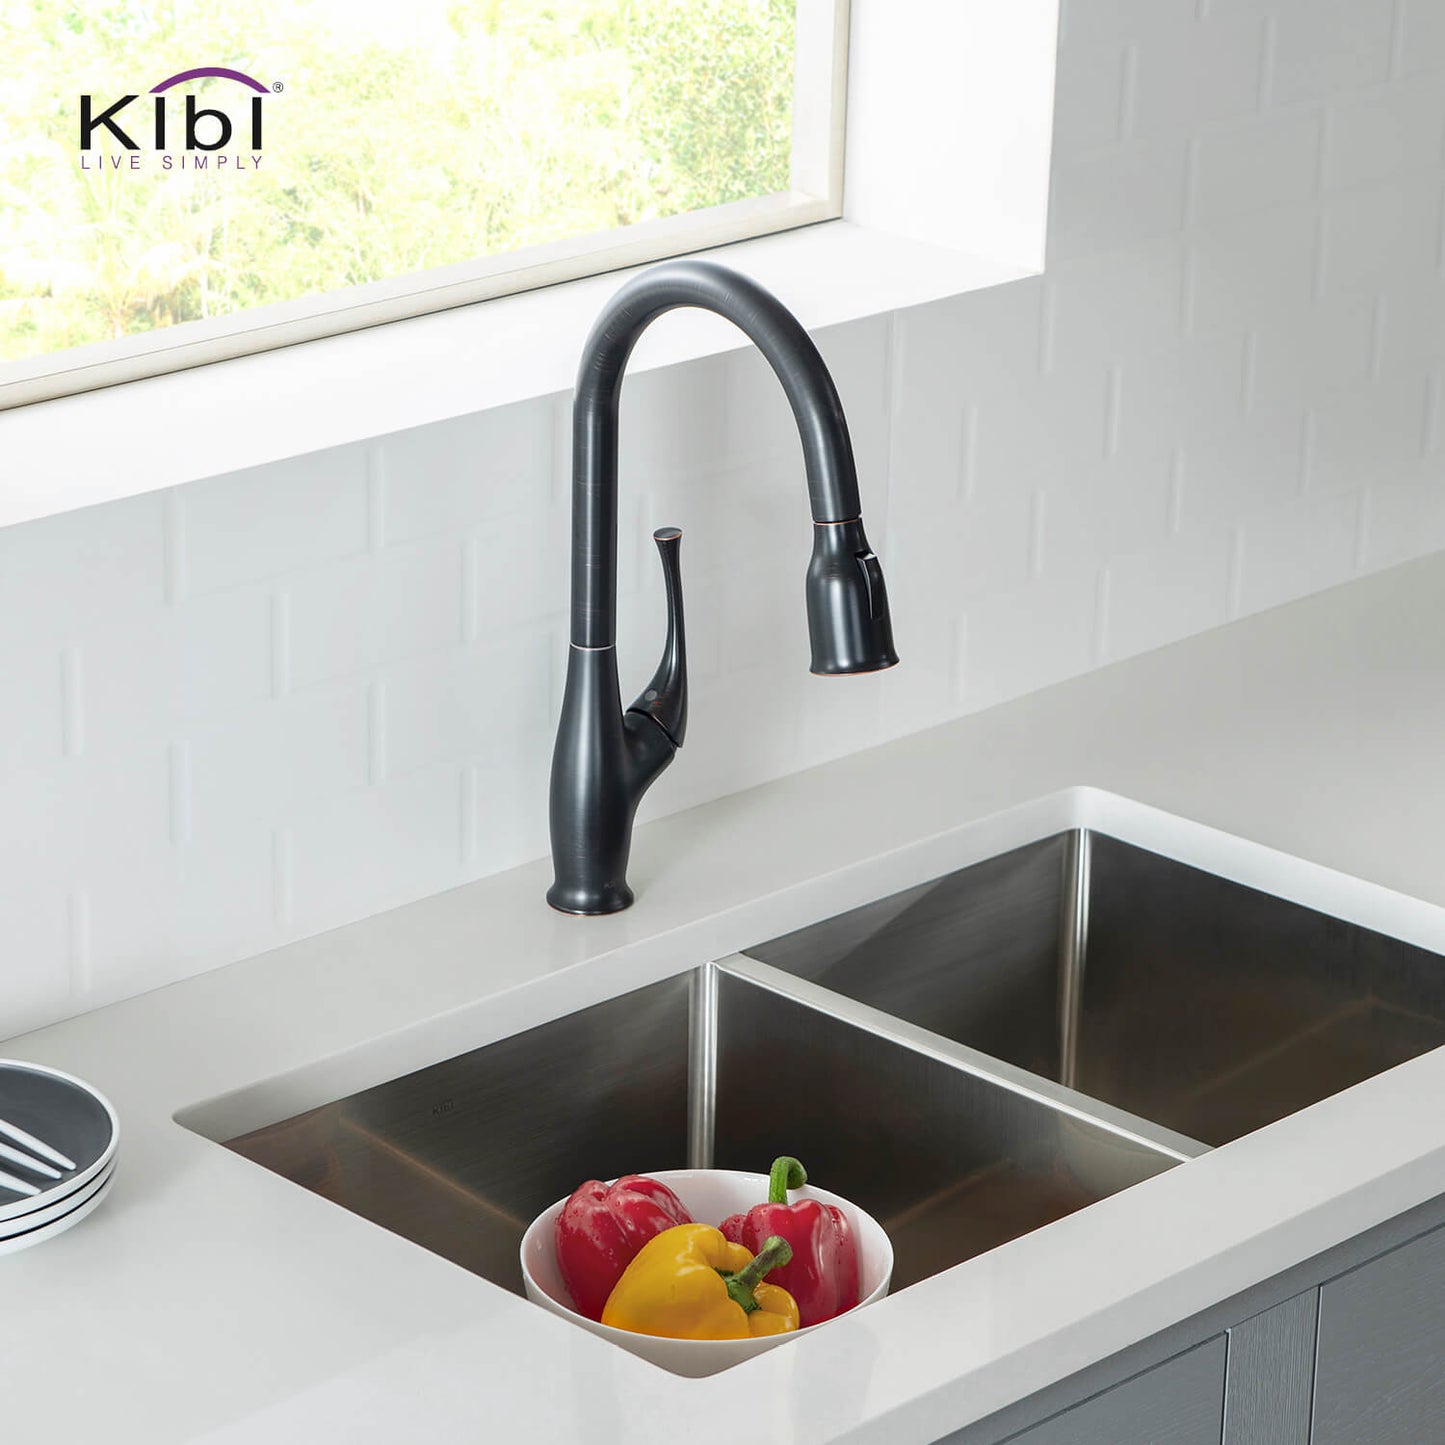 Kibi Cedar Single Handle High Arc Pull Down Kitchen Faucet in Oil Rubbed Bronze Finish